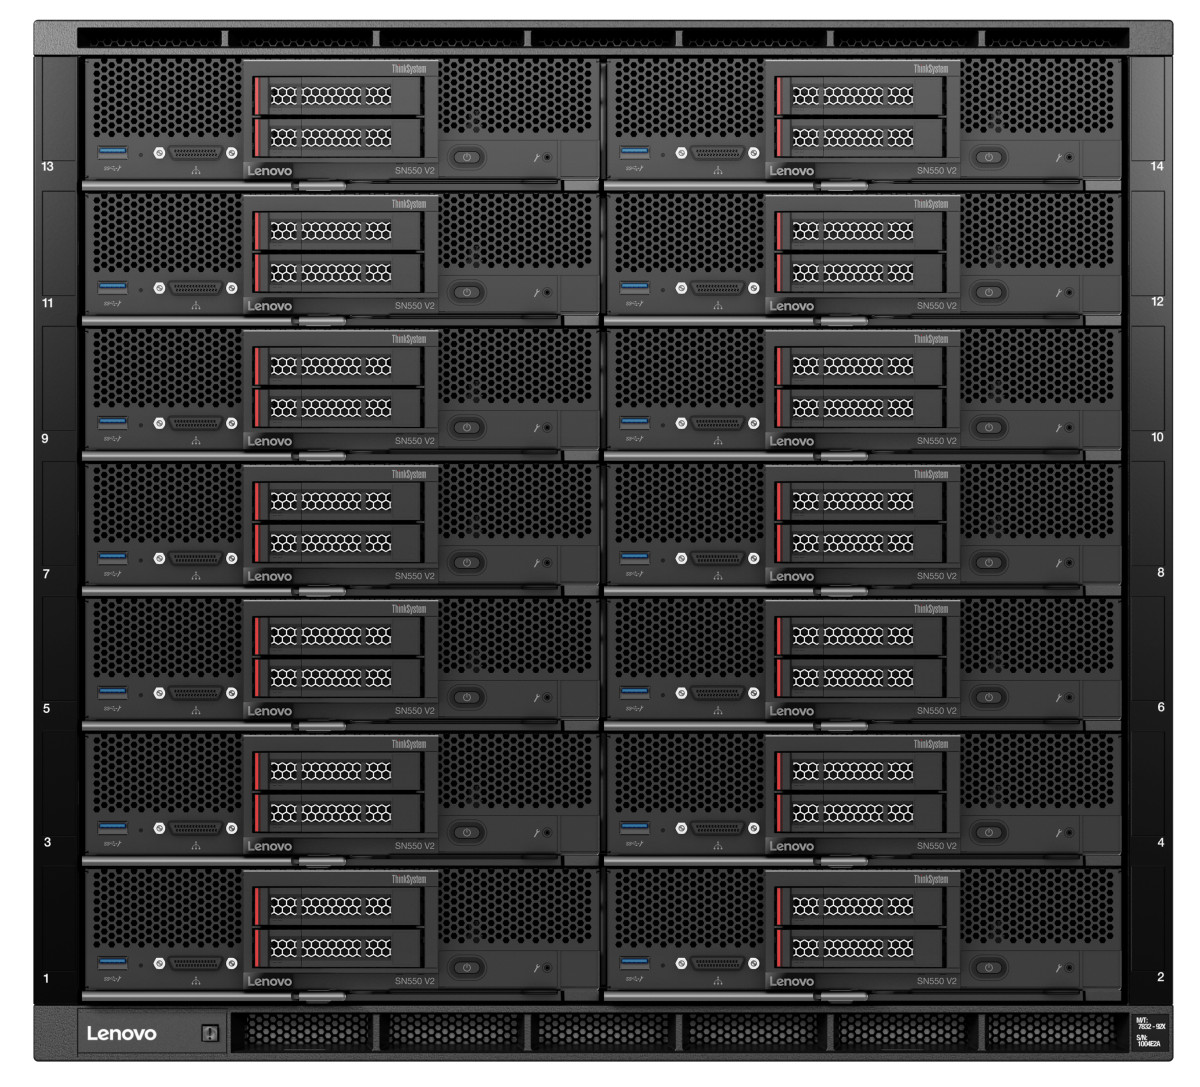 The Flex System Enterprise Chassis houses up to 14 SN550 V2 compute nodes, delivering high density.